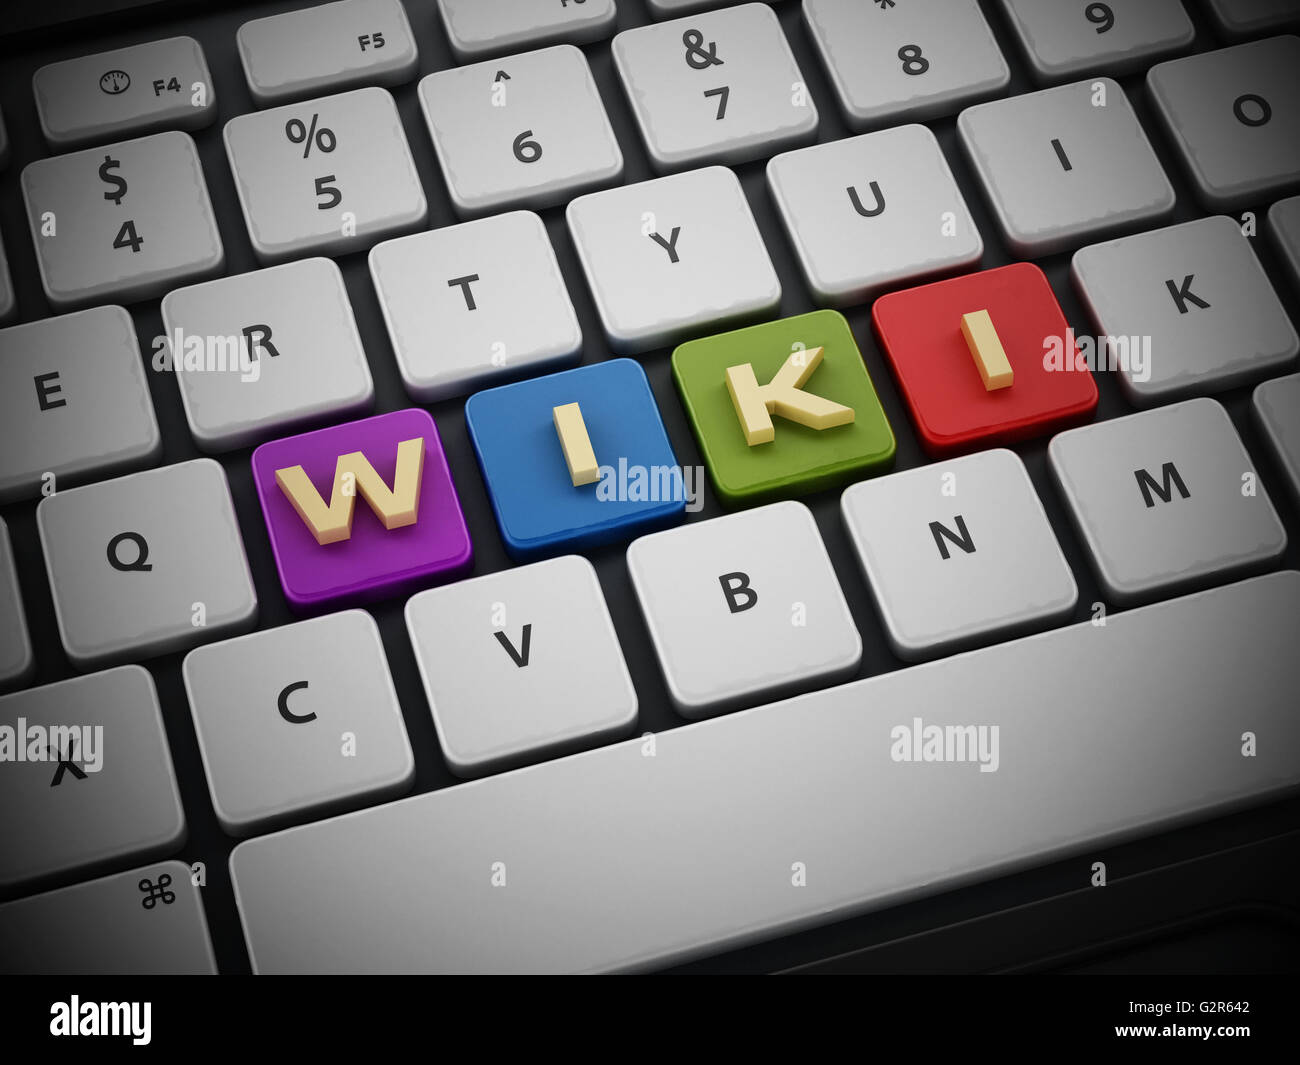 WIKI text on keyboard keys. 3D illustration. Stock Photo